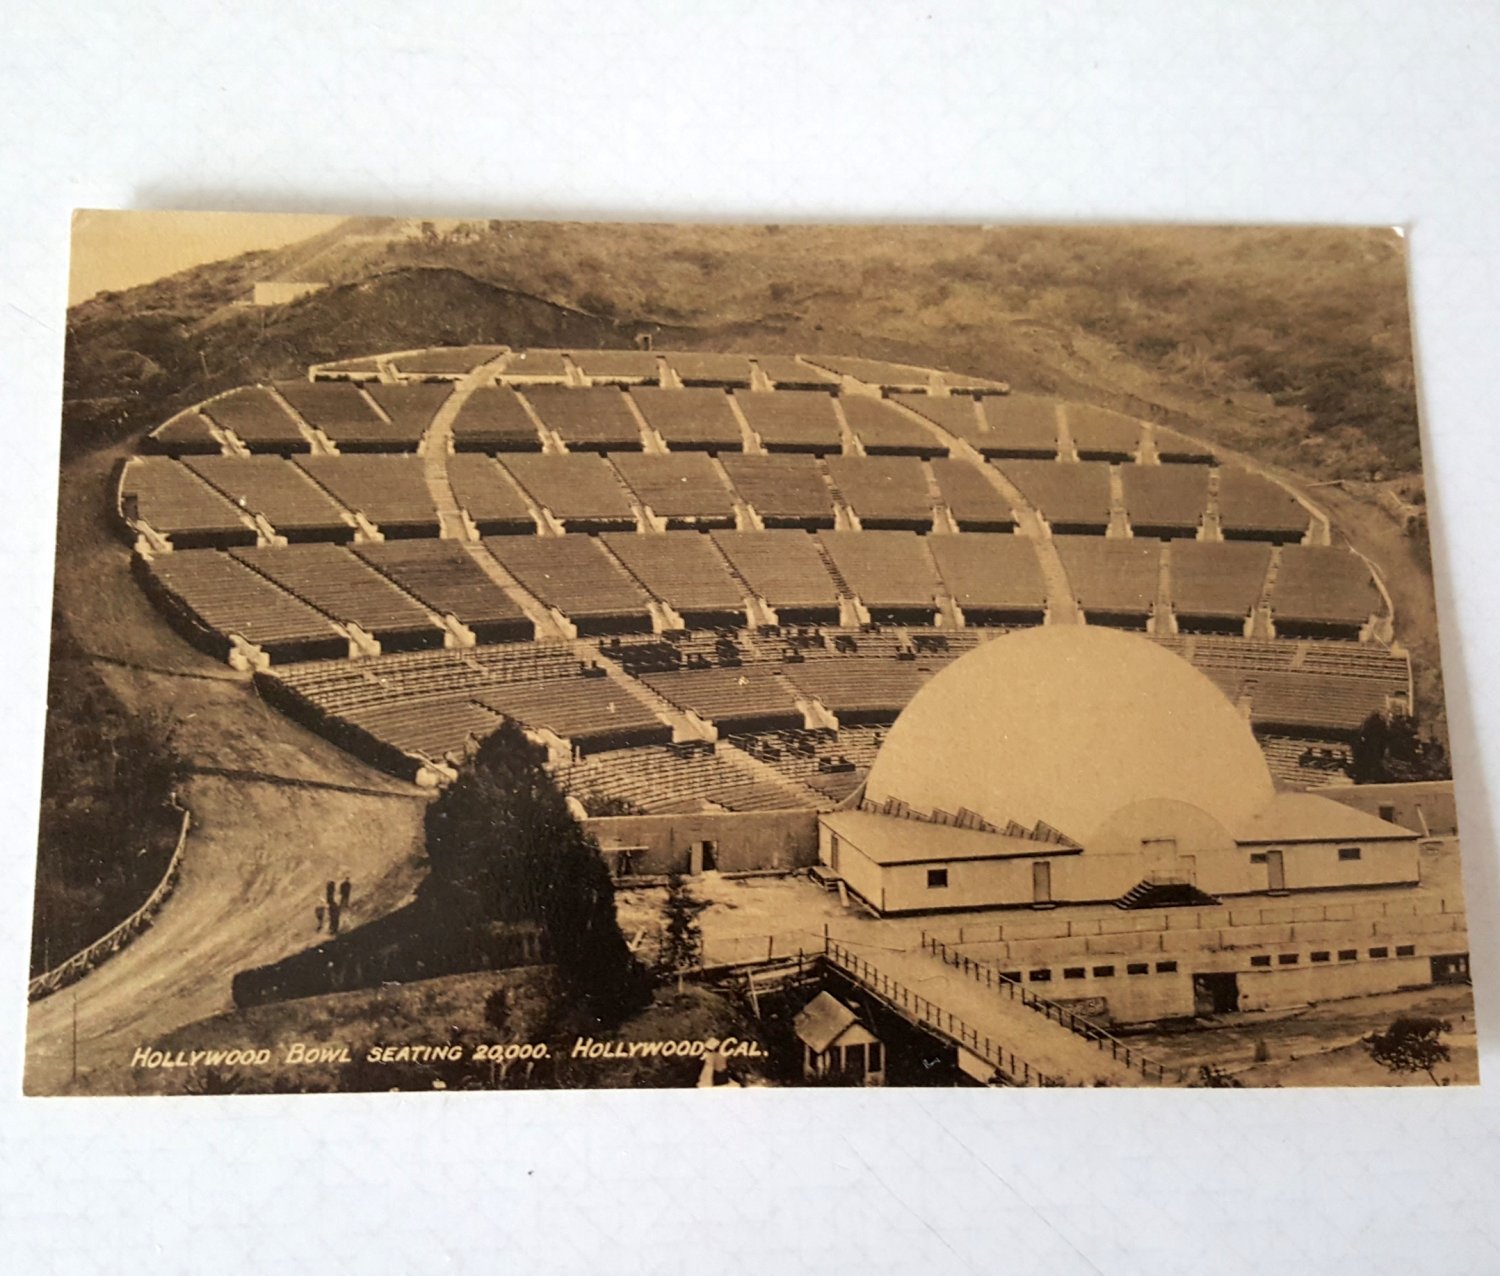 Vintage Hollywood Bowl Seating 20,000 Postcard